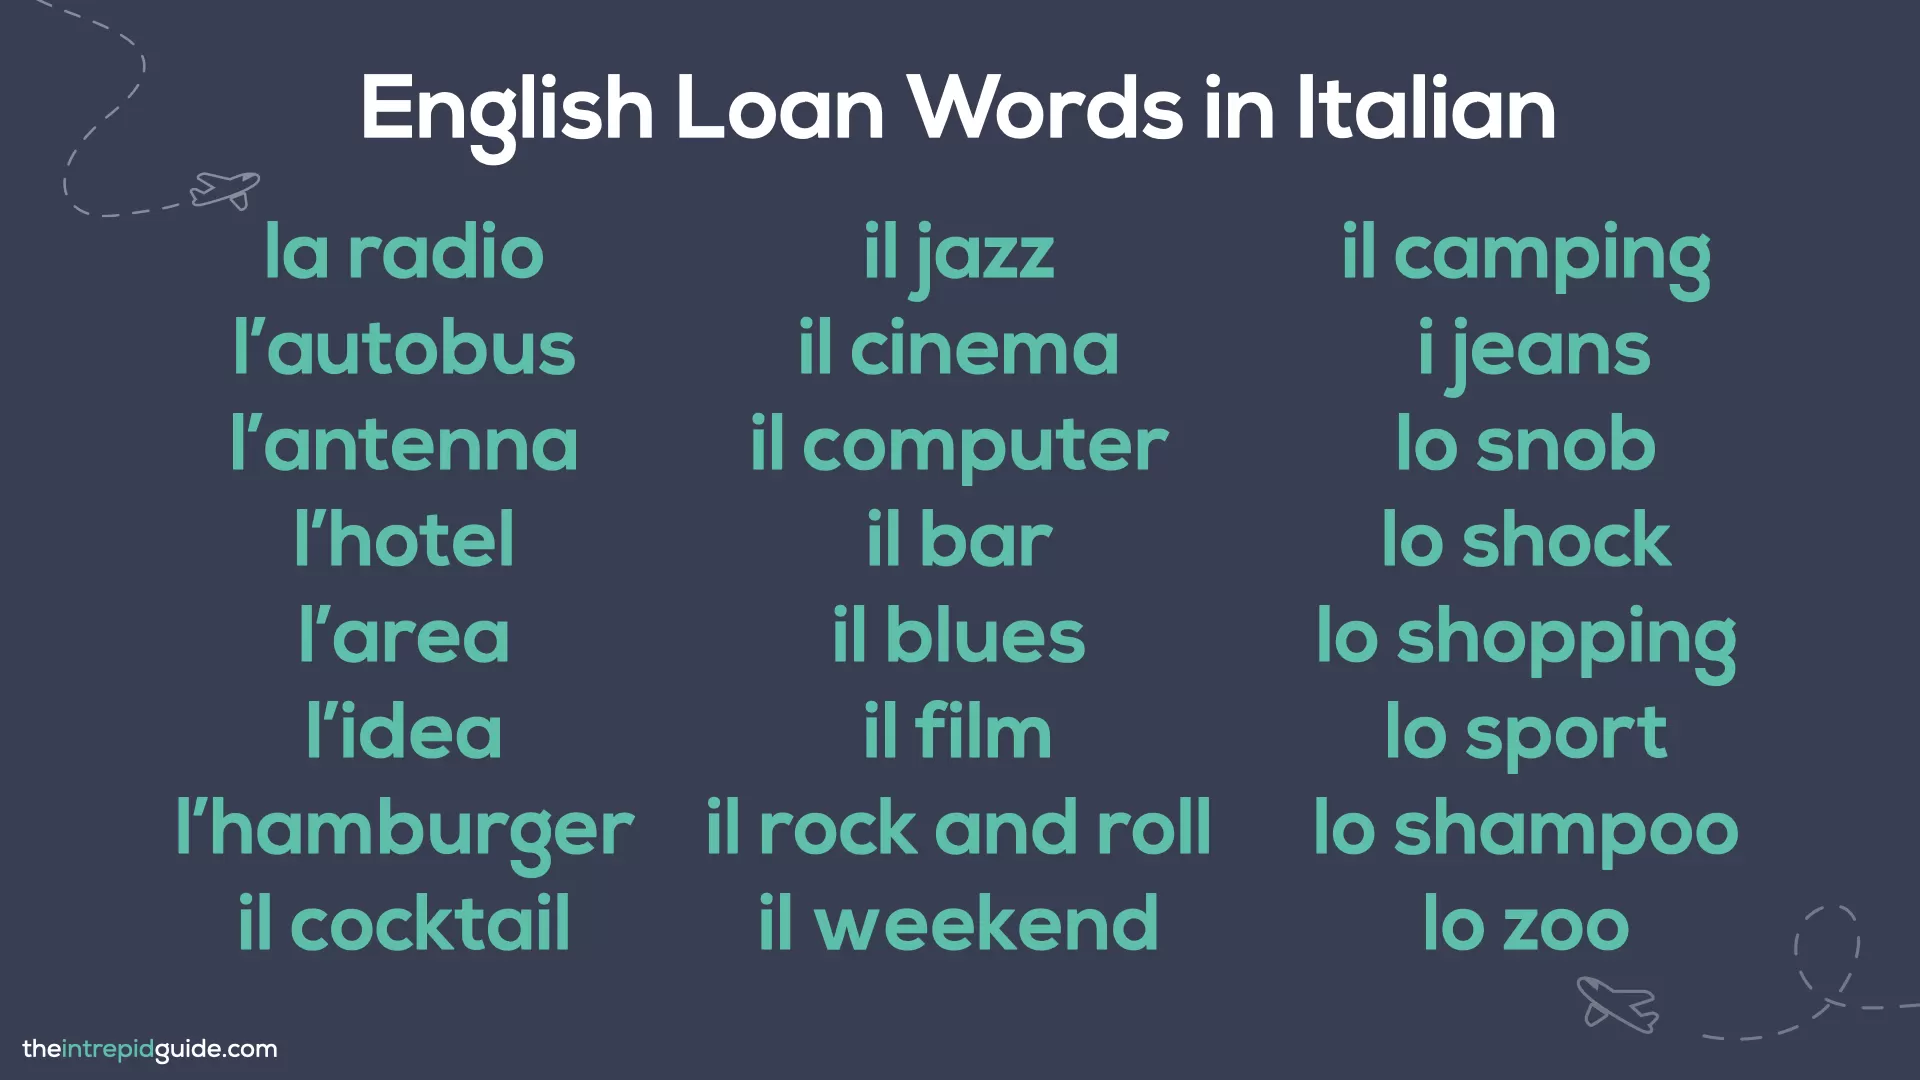 Italian cognates and loan words - English loan words in Italian